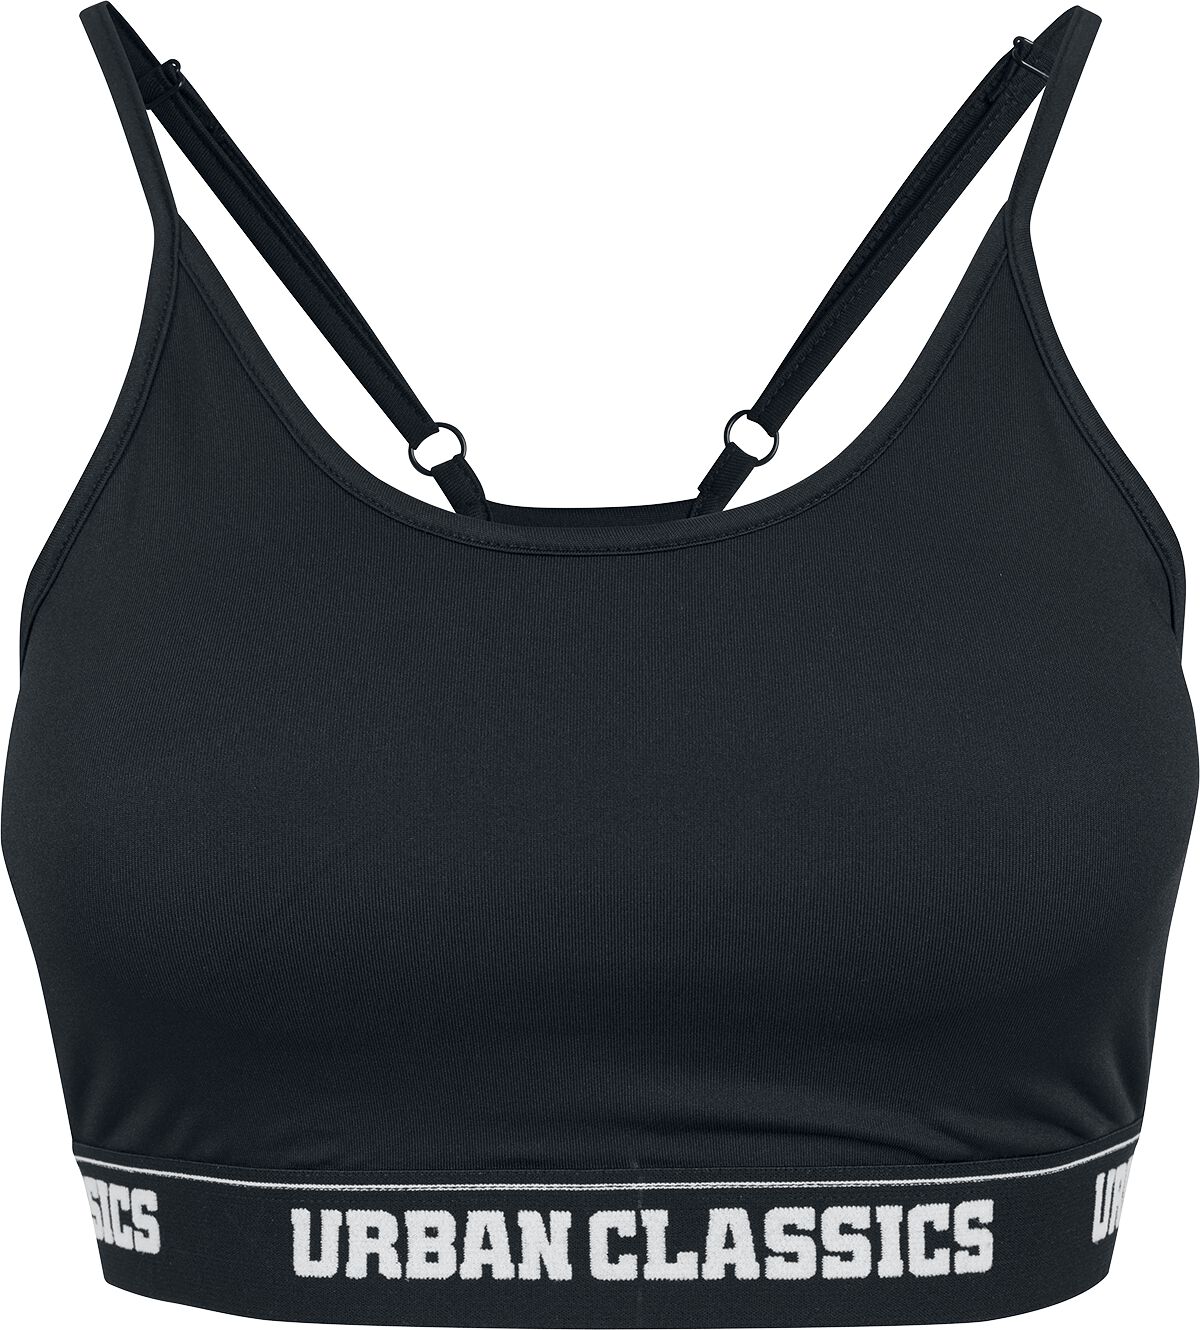 Urban Classics Ladies Sports Bra Bustier schwarz in S